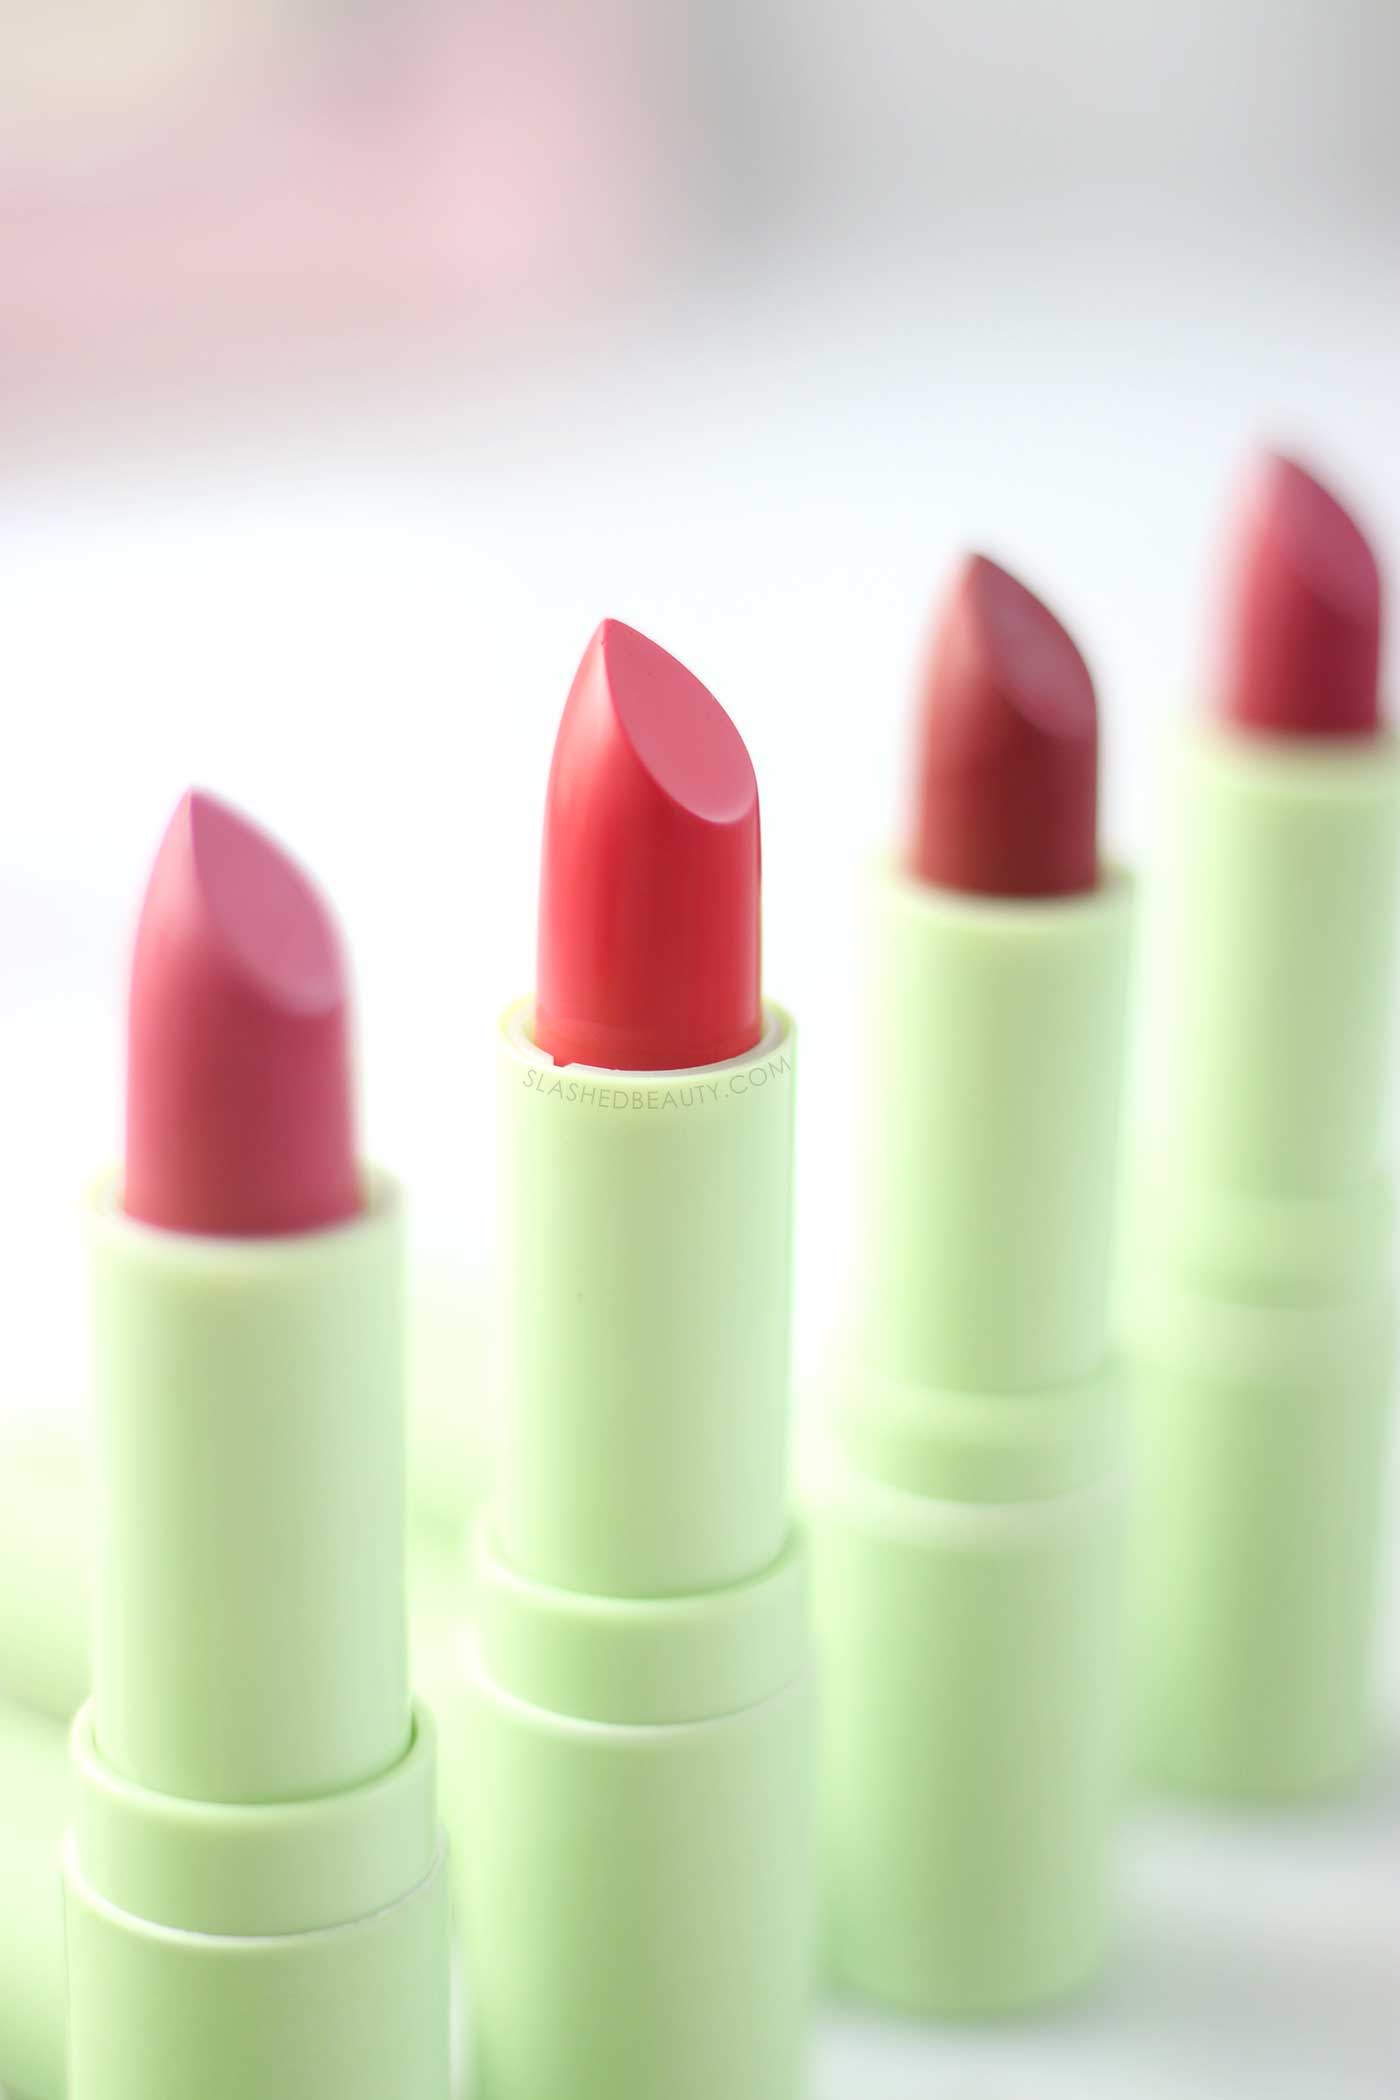 Moisturizing Lipsticks that Last! Pixi Naturellelips Review and Swatches | Slashed Beauty